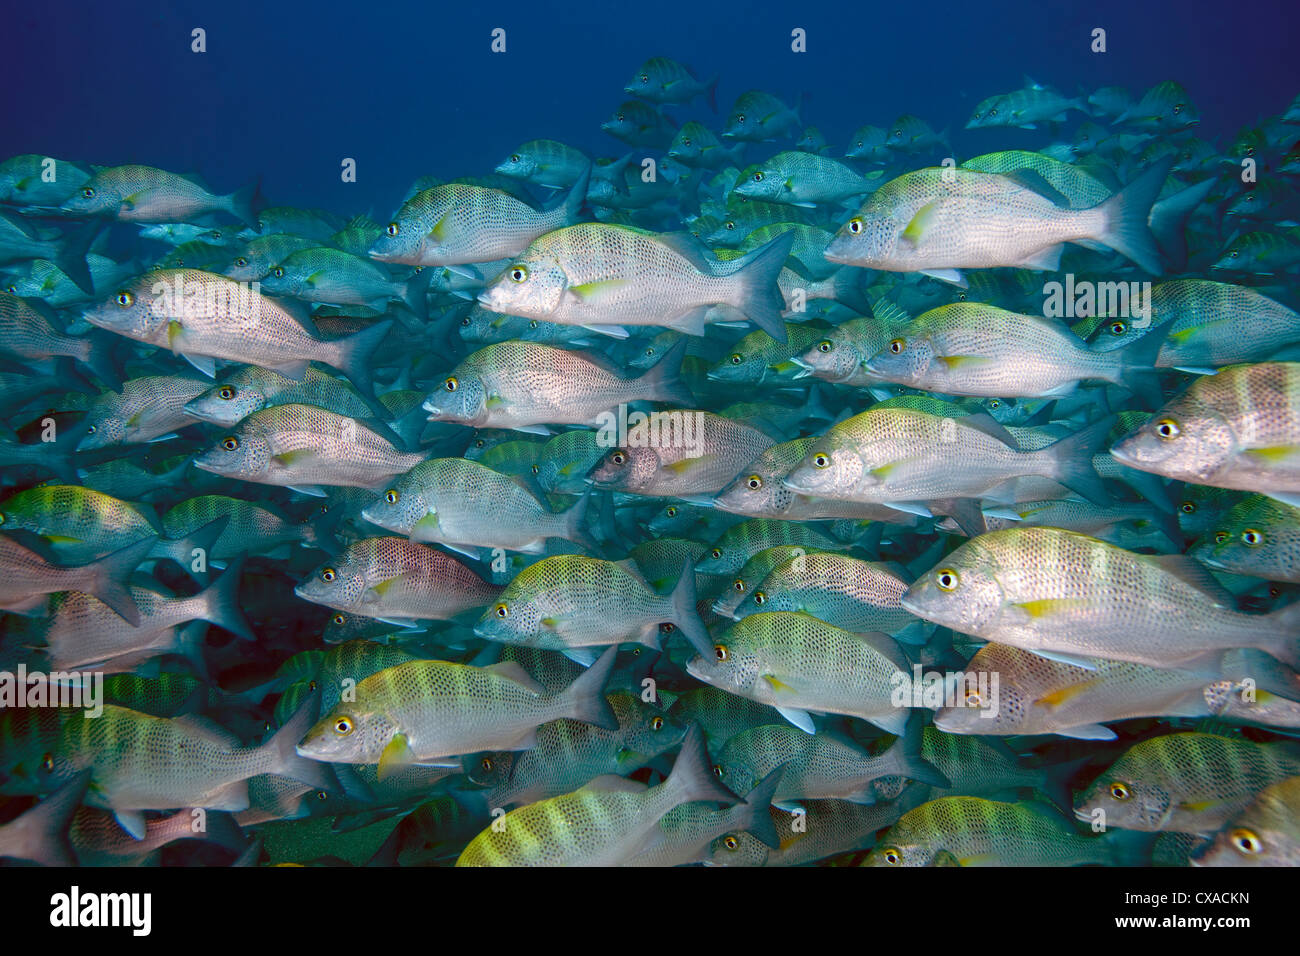 Schooling tropical fish at Cabo Pulmo National Marine Park, Mexico. Stock Photo